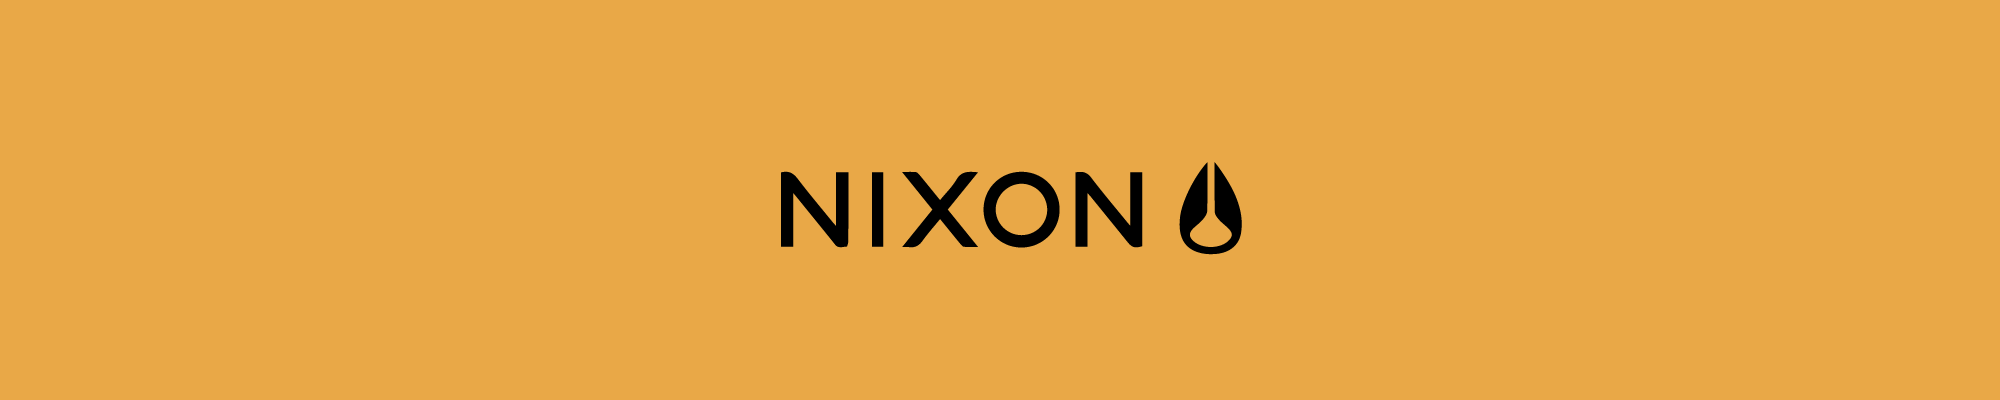 Nixon-2000x500